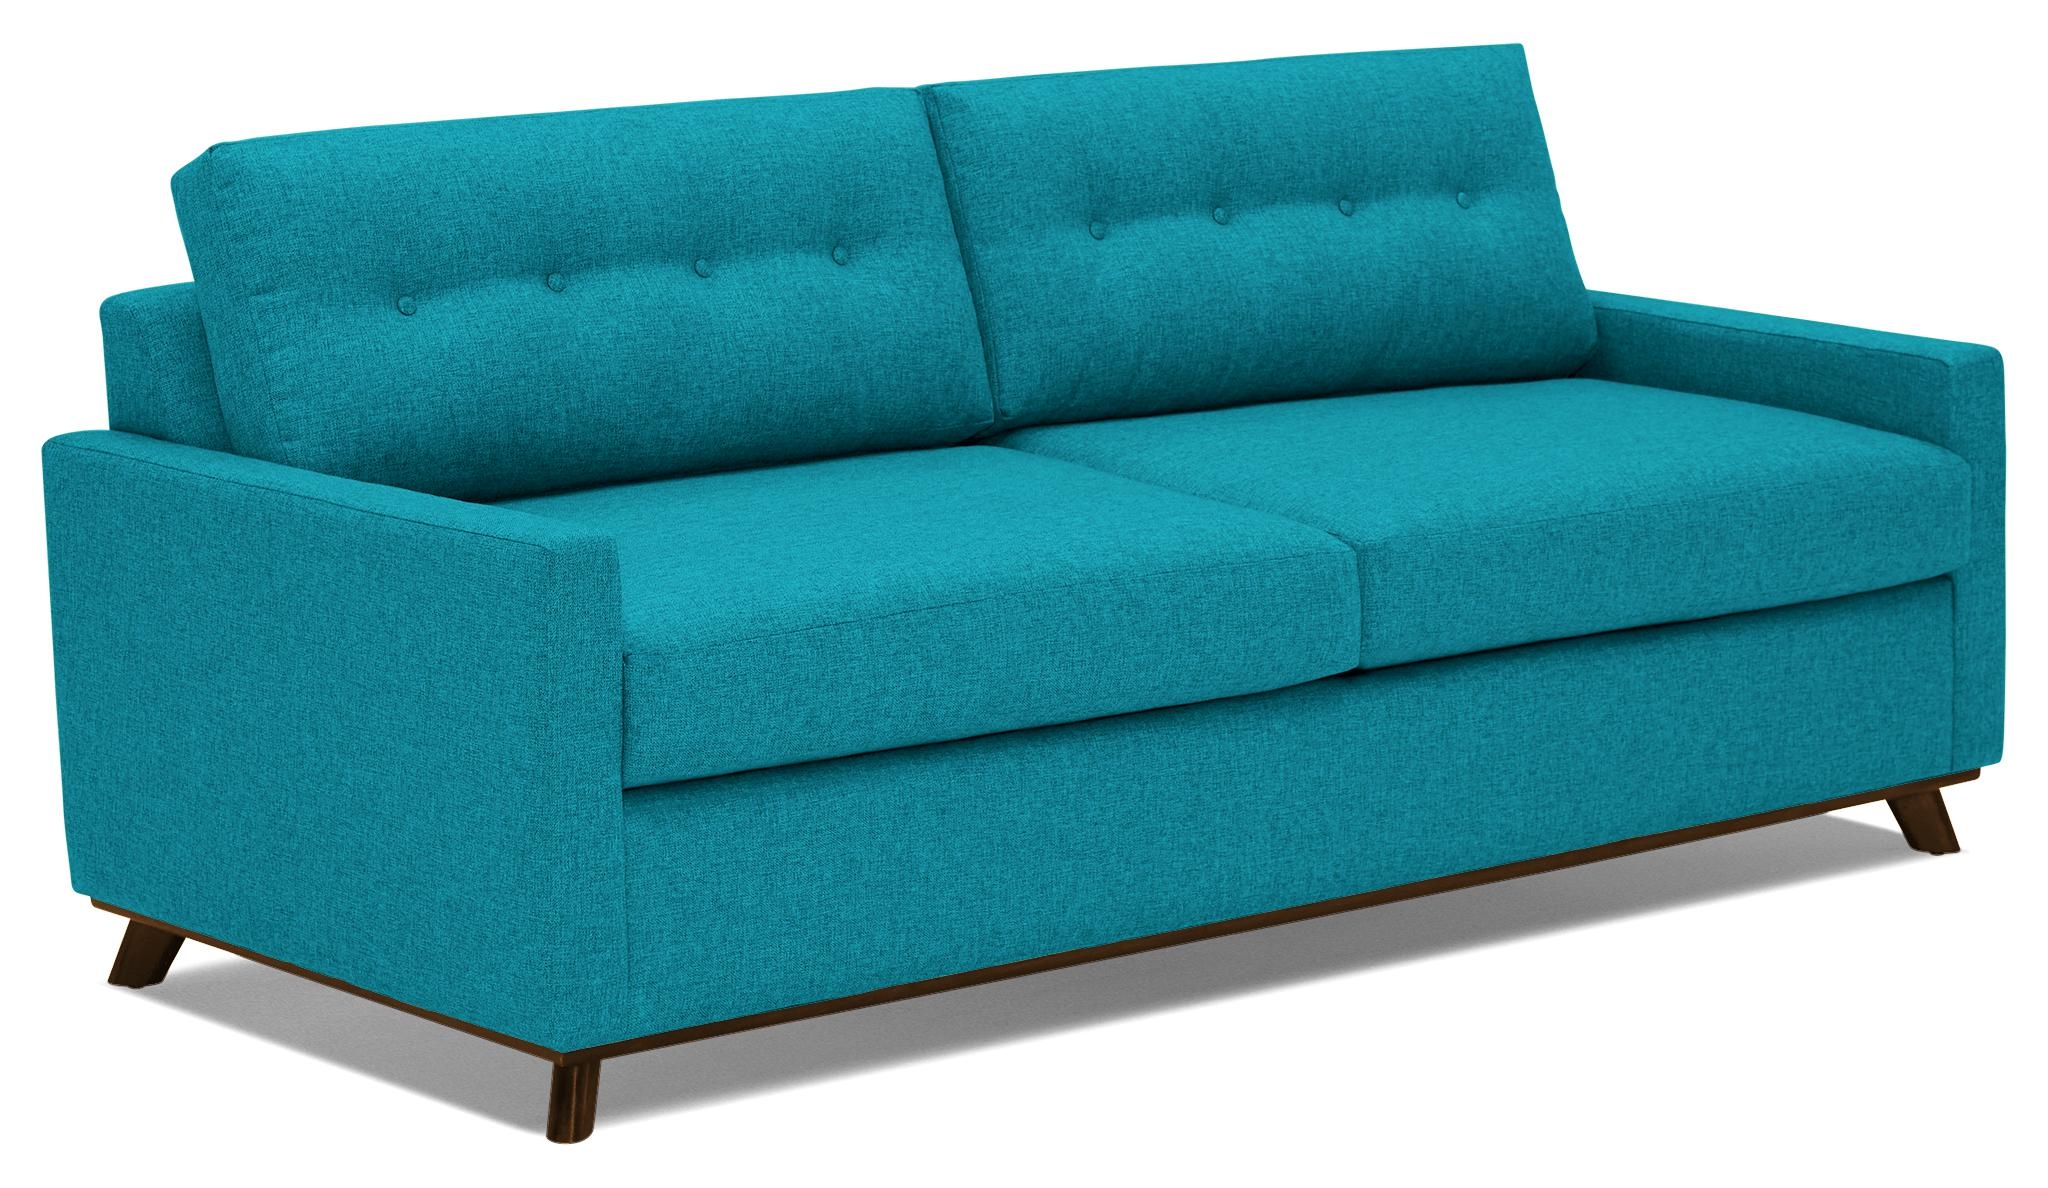 Blue Hopson Mid Century Modern Sleeper Sofa - Vibe Aquatic - Mocha - Image 1